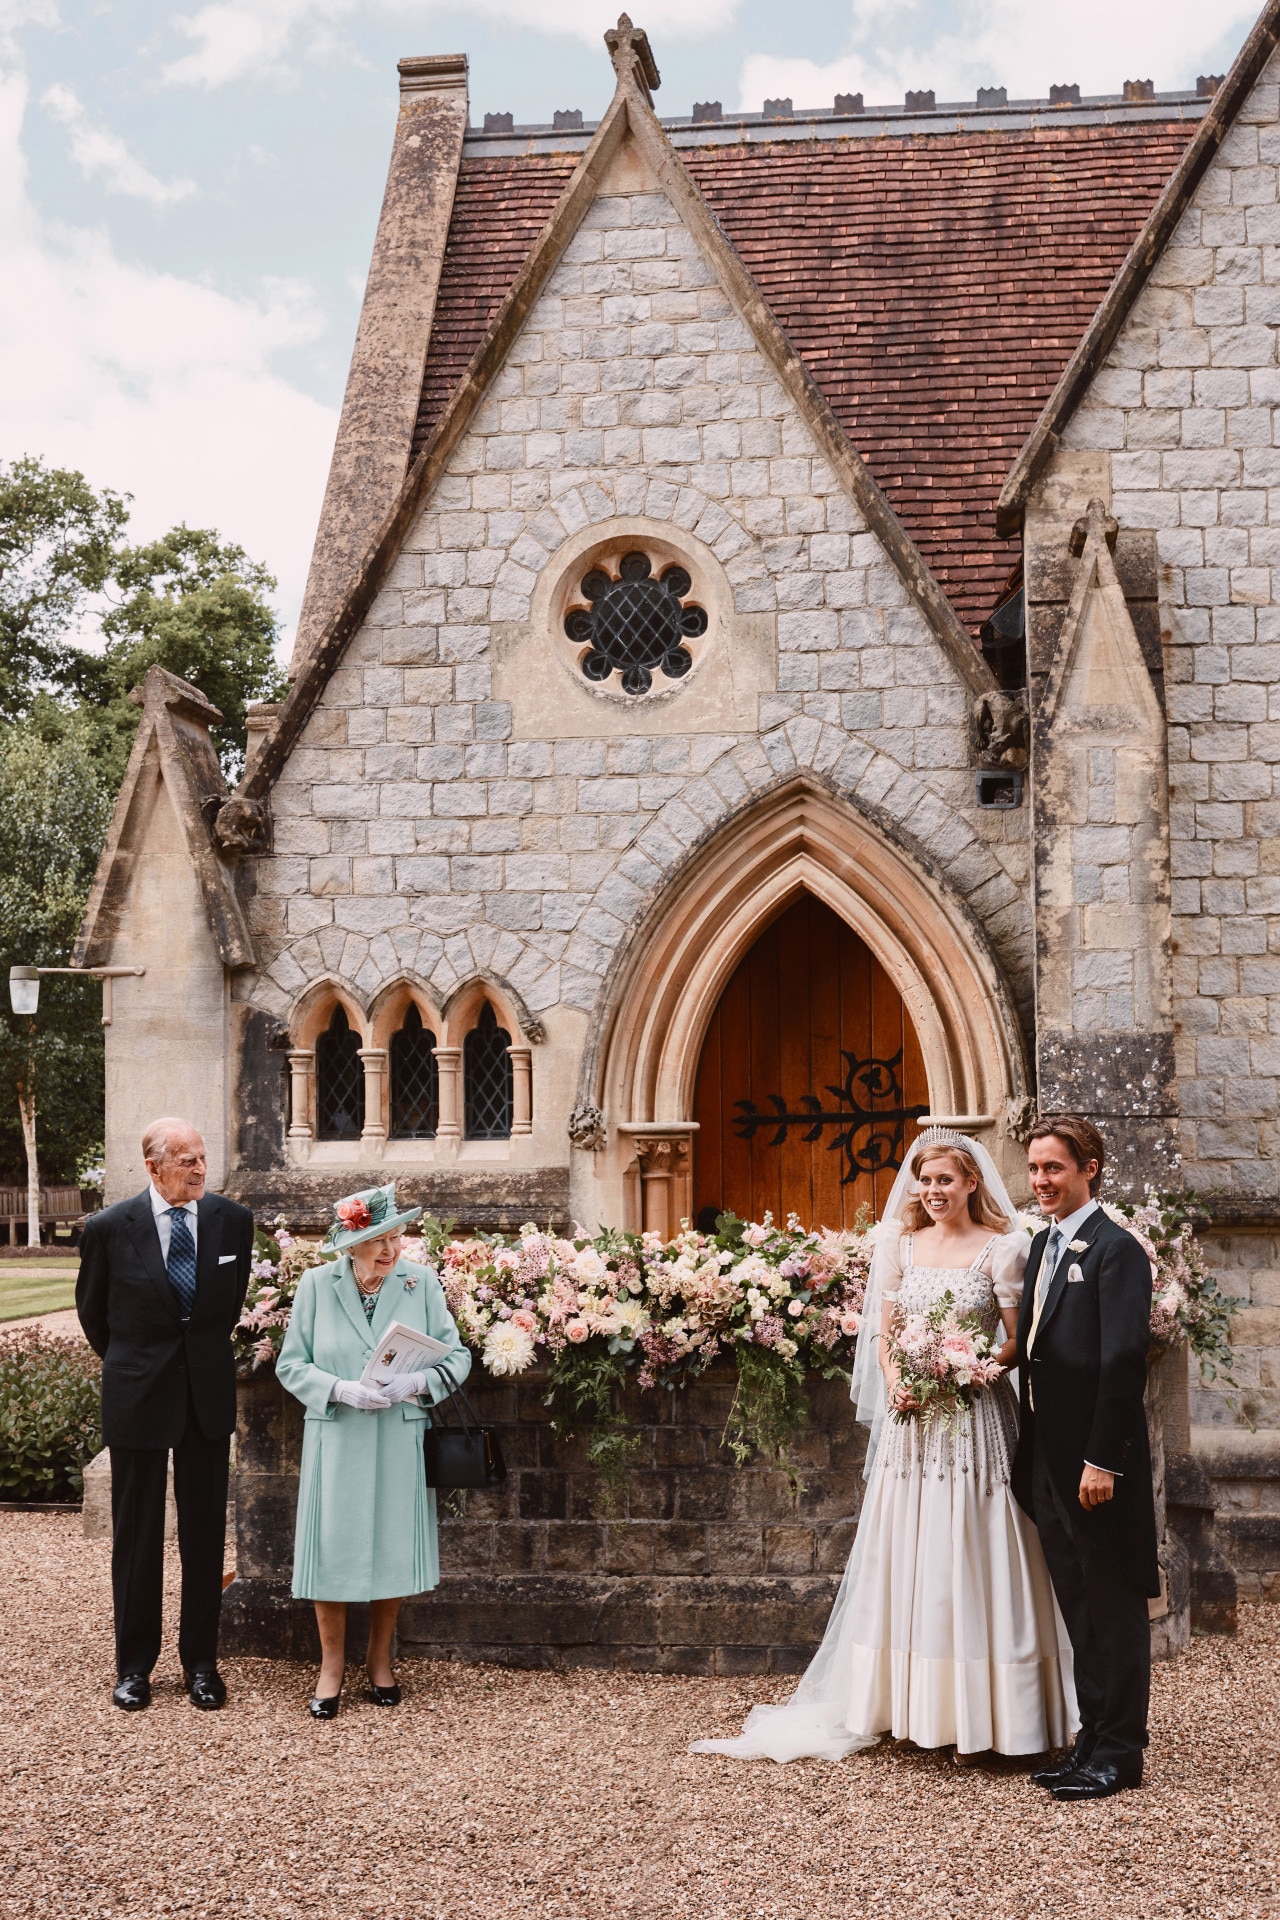 Royal Family Releases Official Wedding Photos Cnn Video